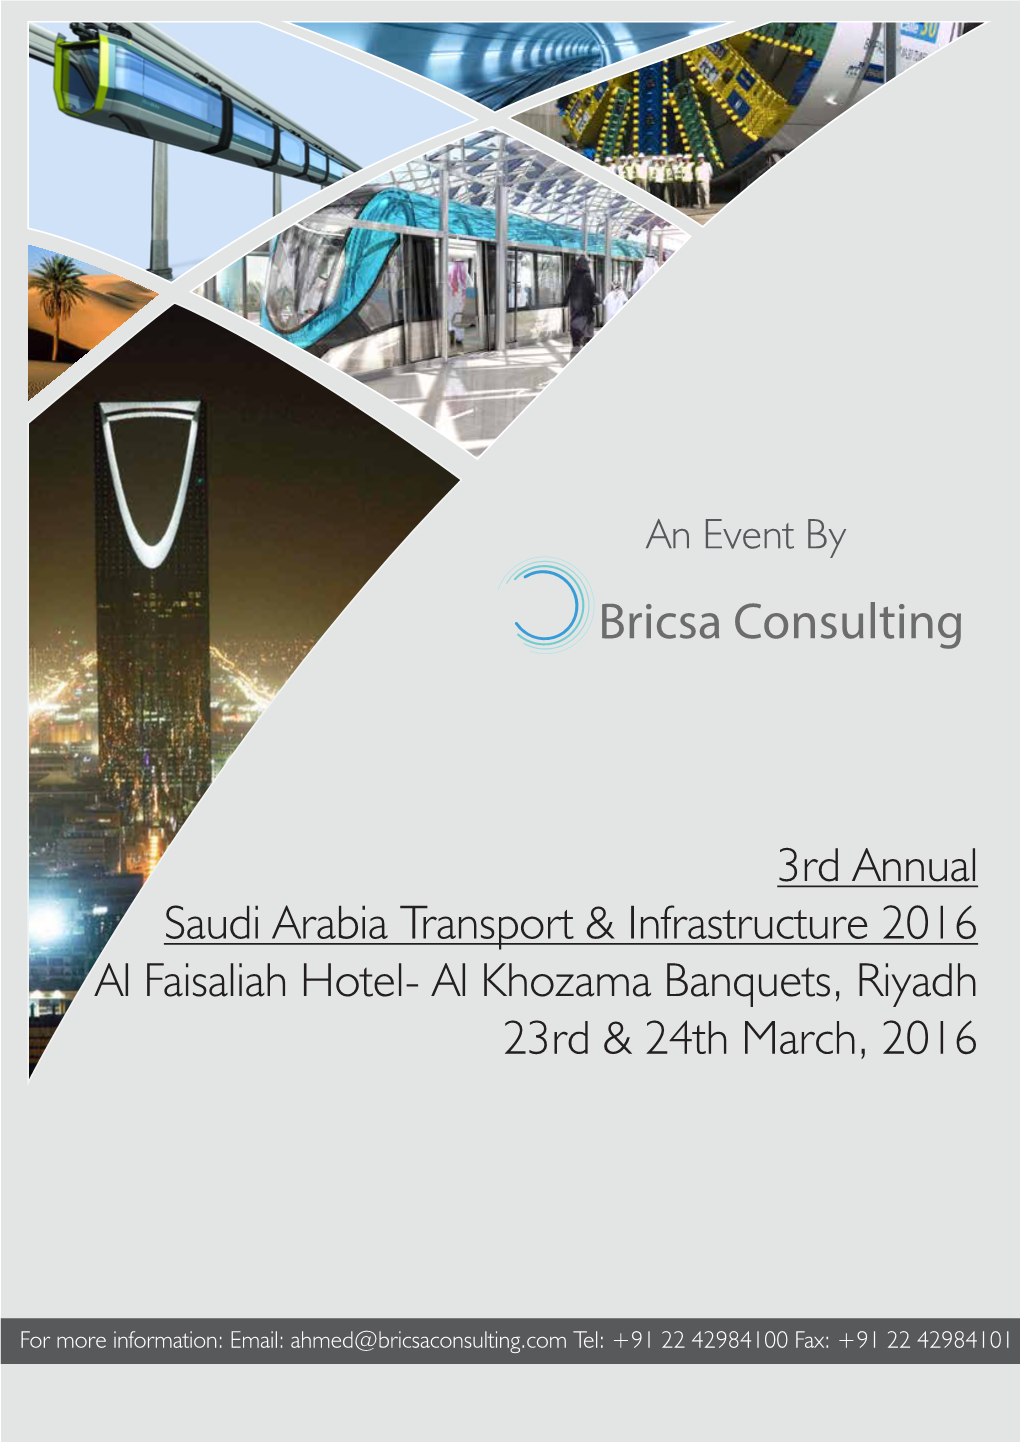 3Rd Annual Saudi Arabia Transport & Infrastructure 2016